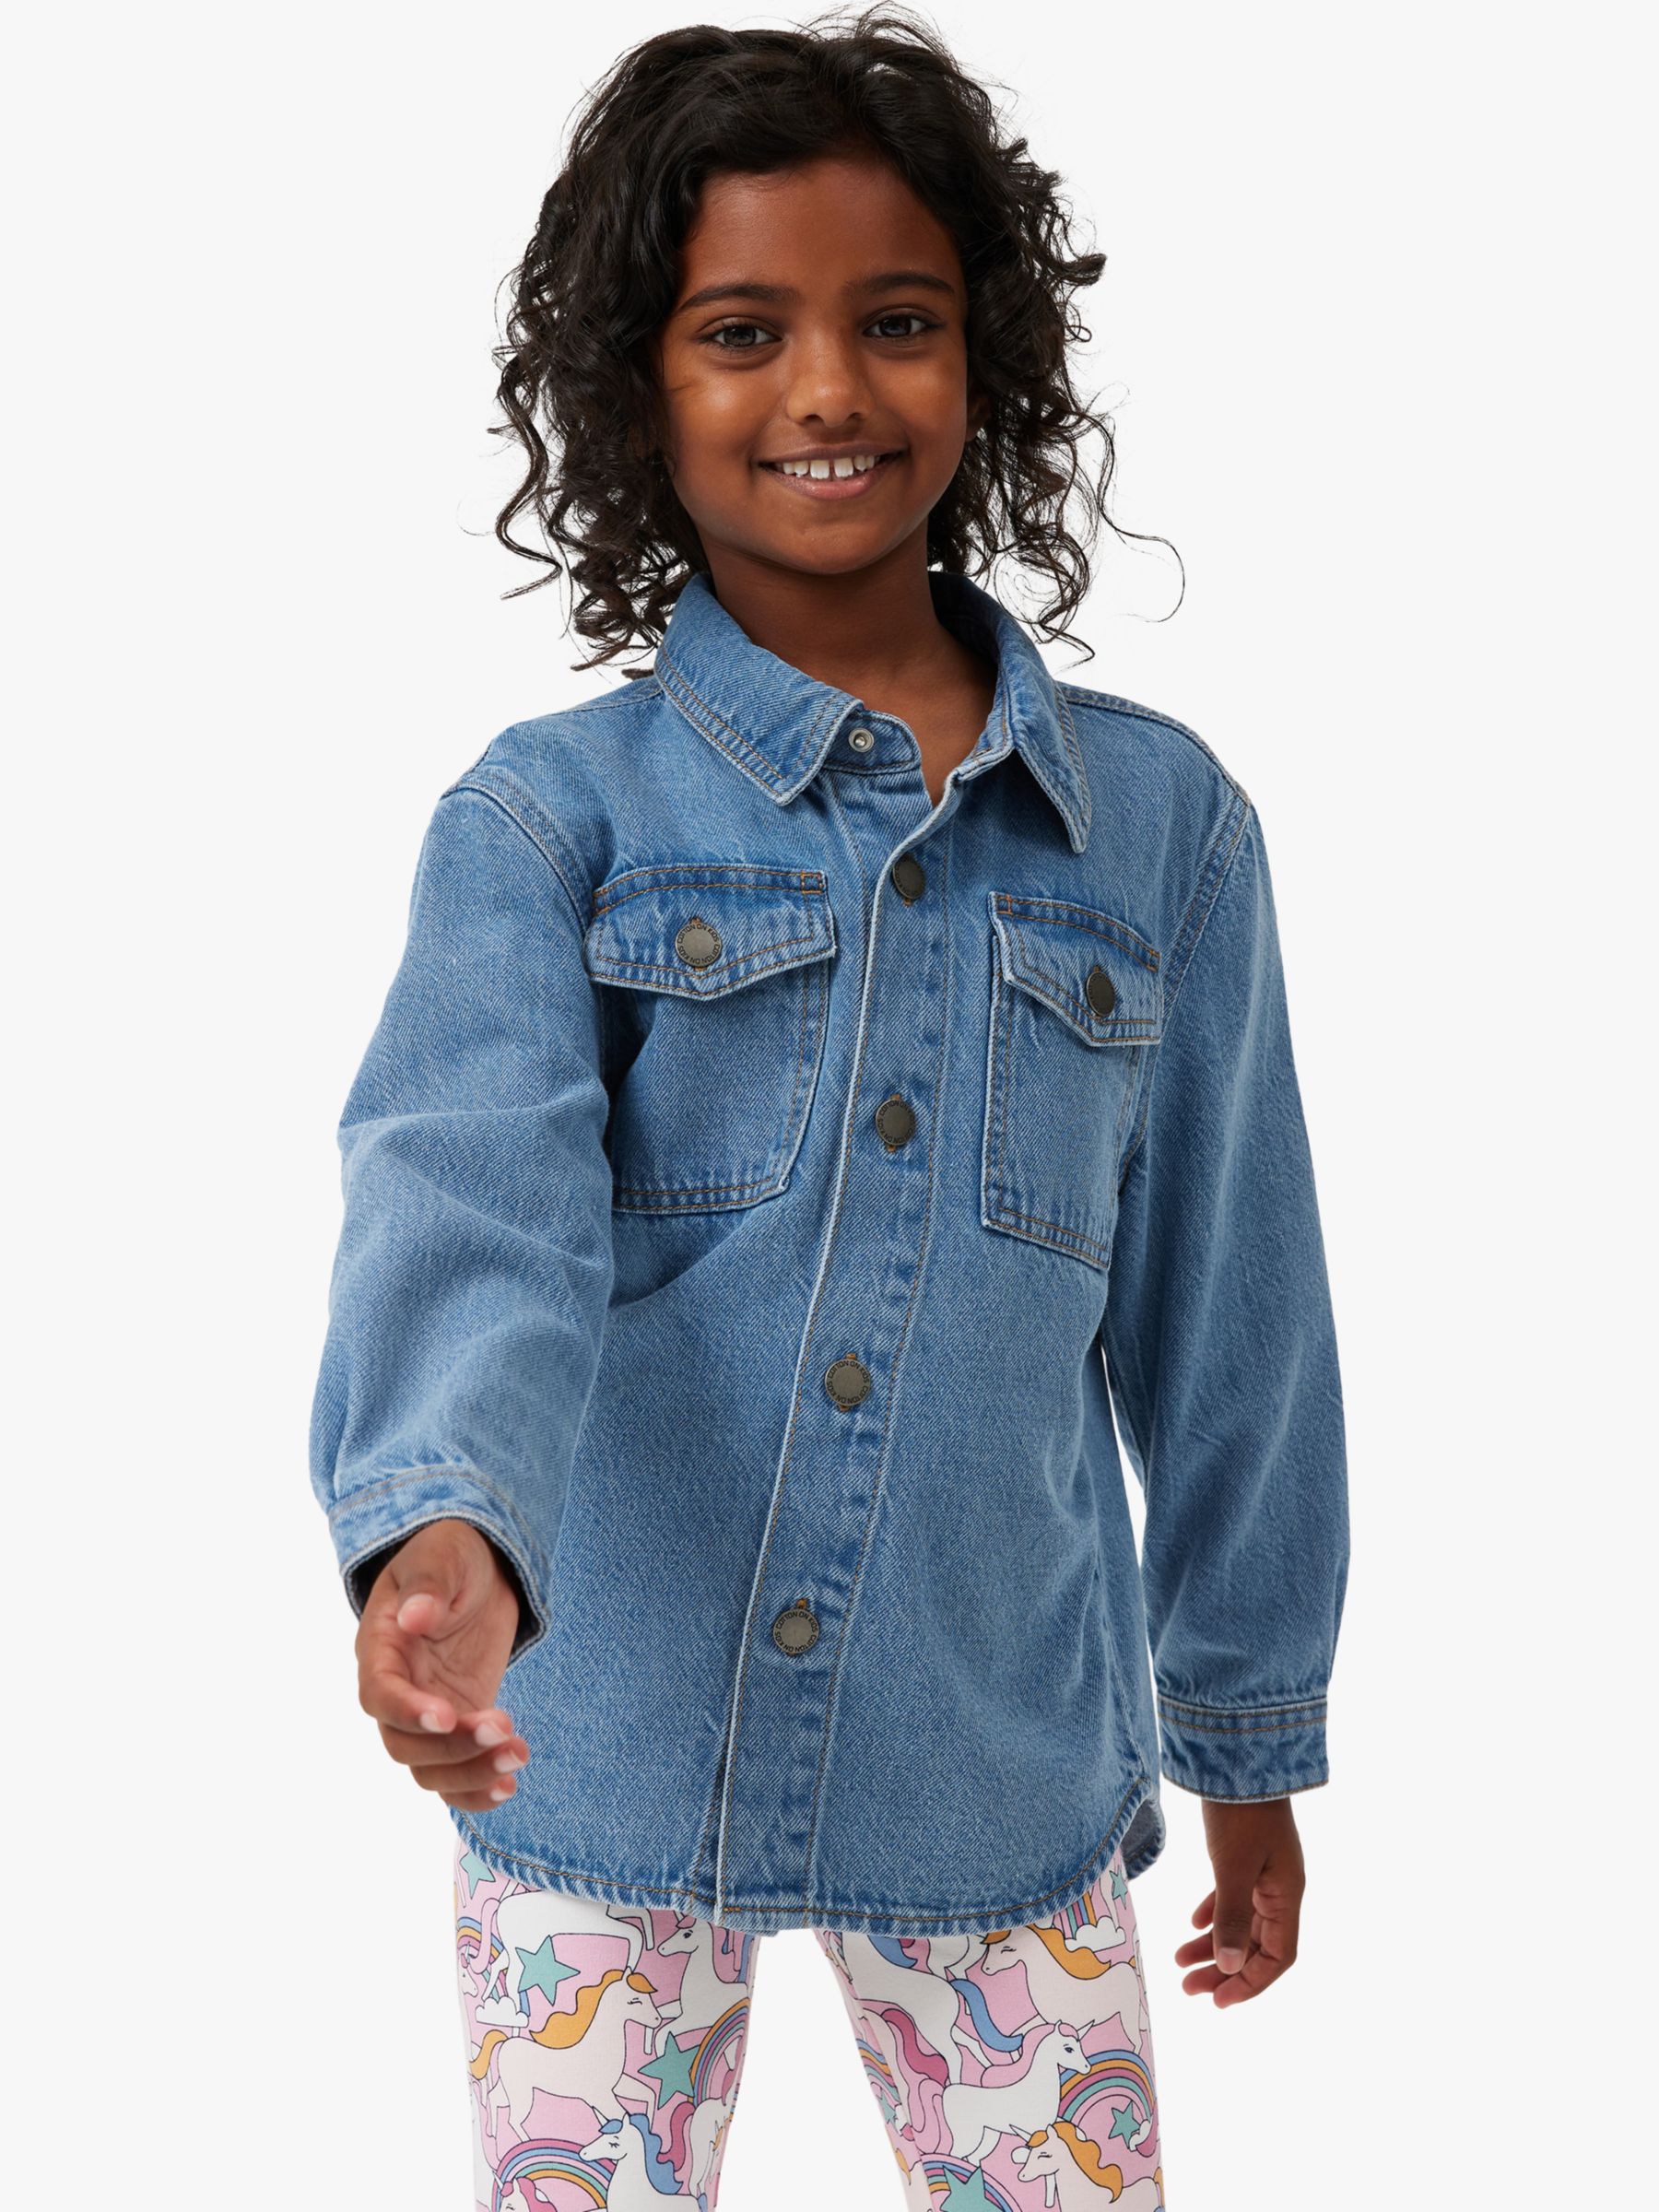 Cotton On Kids' Denim Jacket, Blue